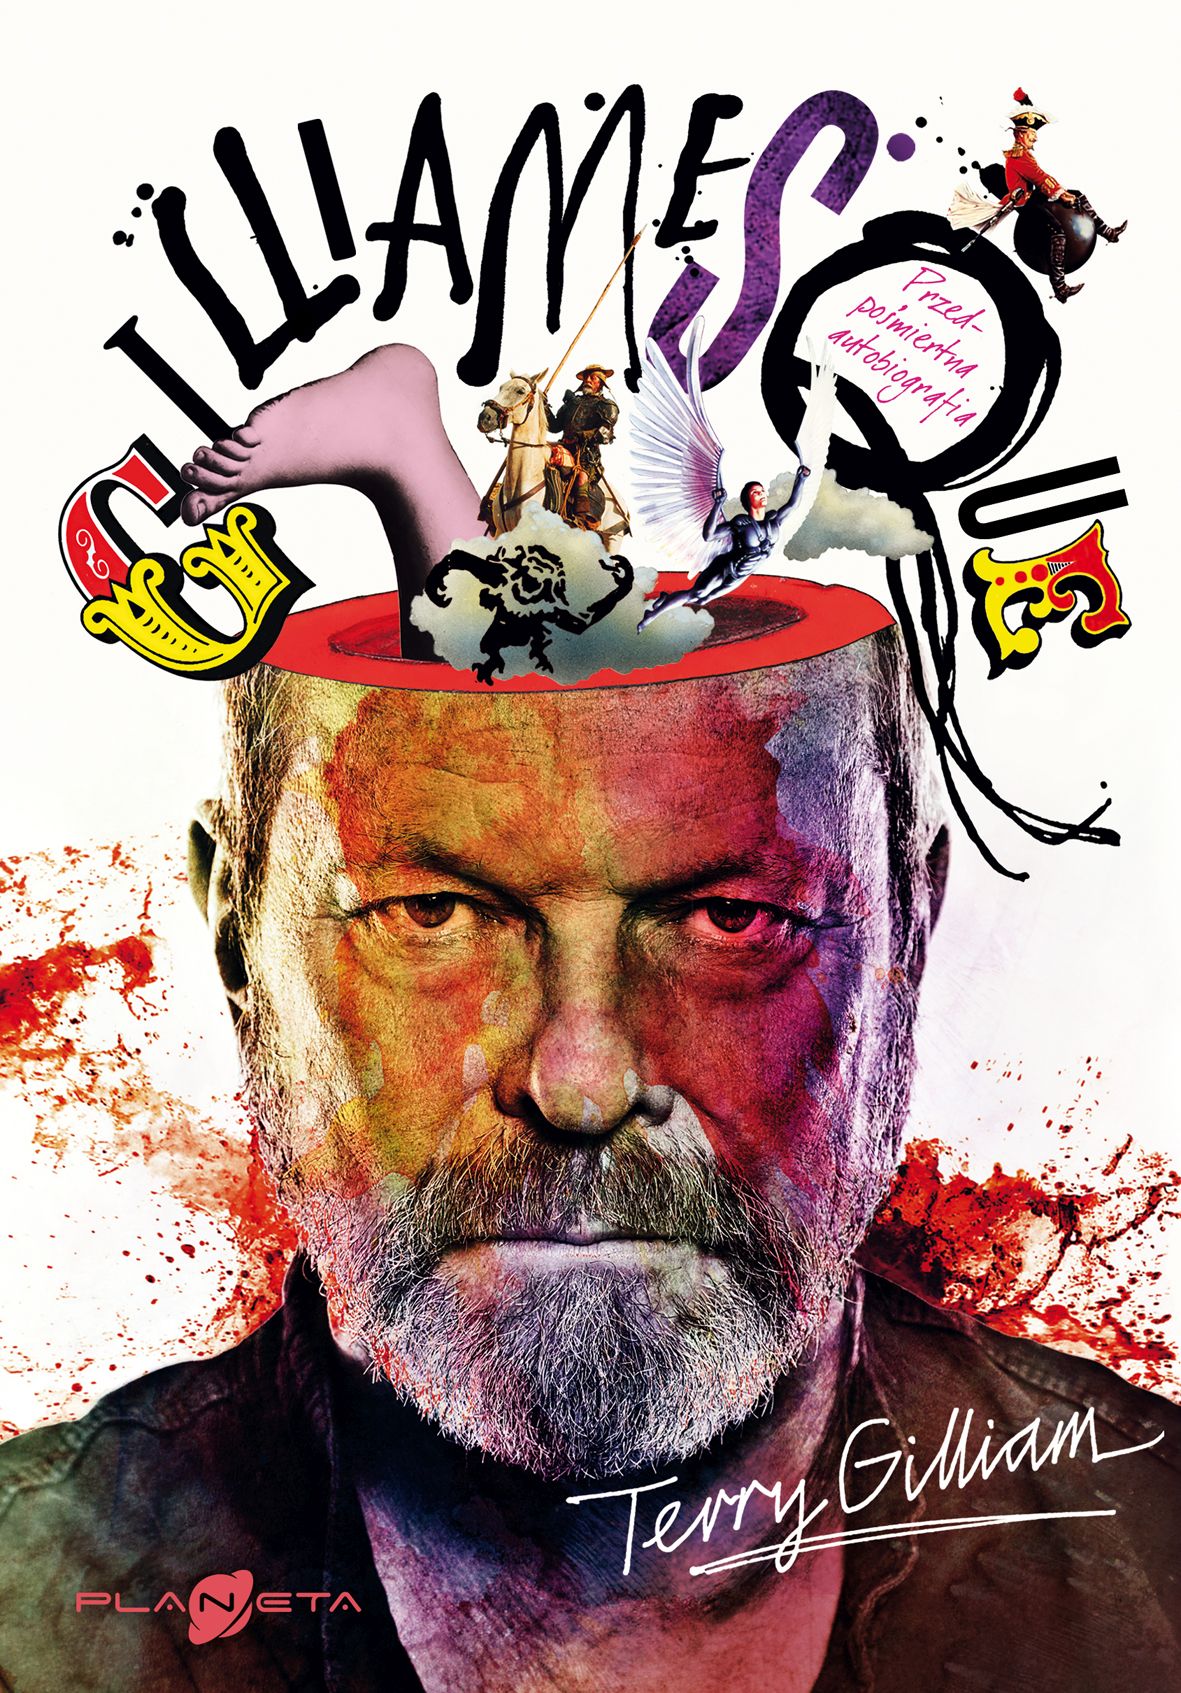 "Gilliamesque", Terry Gilliam